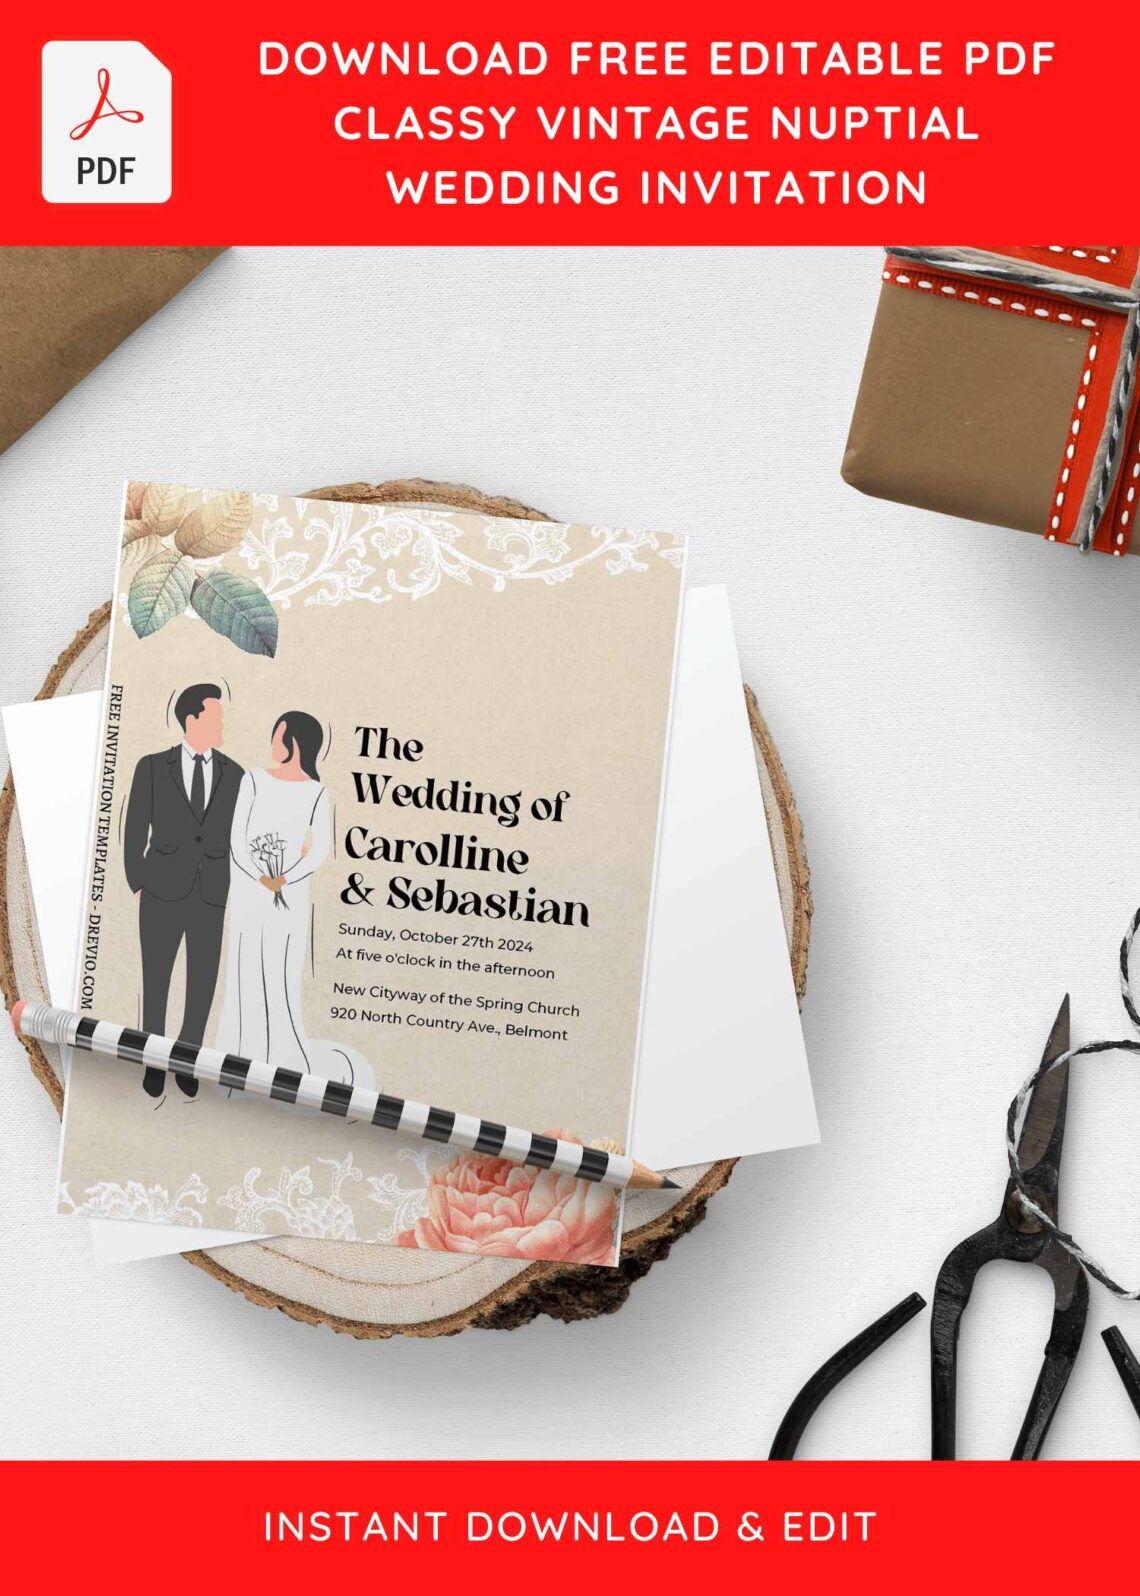 (Free Editable PDF) Delicate Blooms Nuptial Wedding Invitation Templates